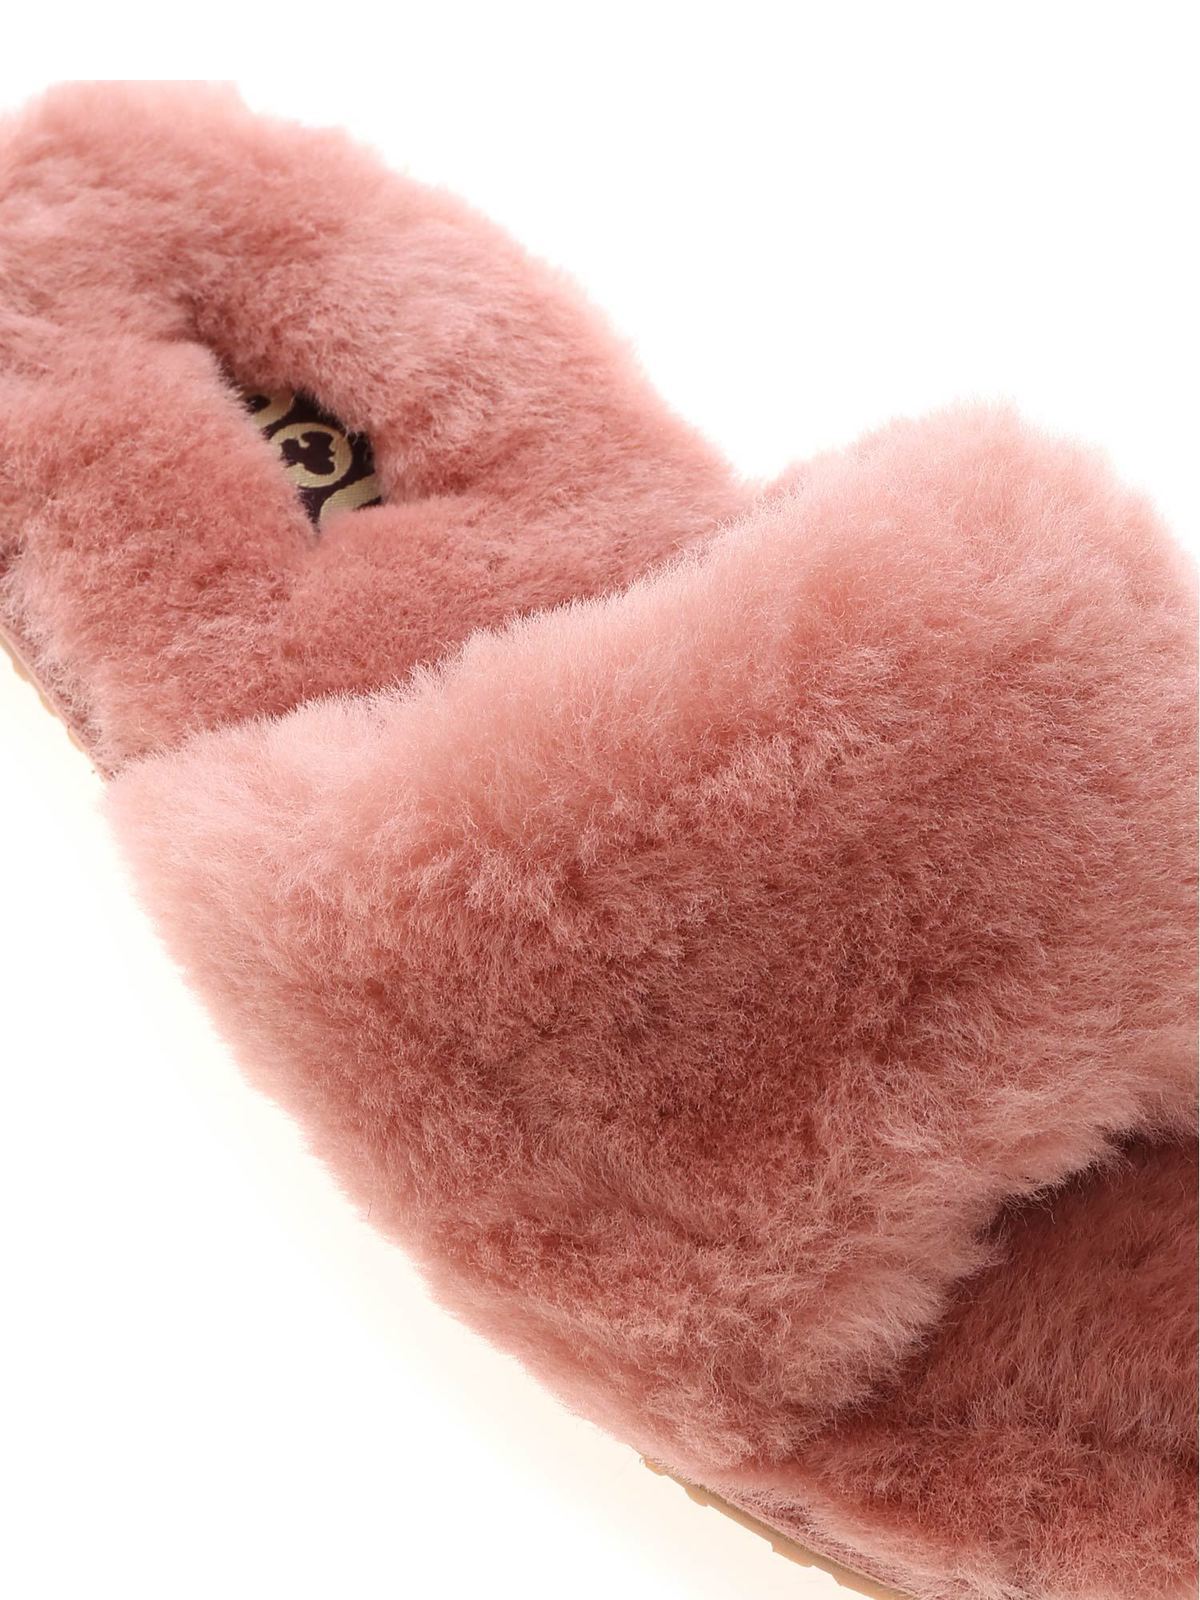 pink sheepskin slippers